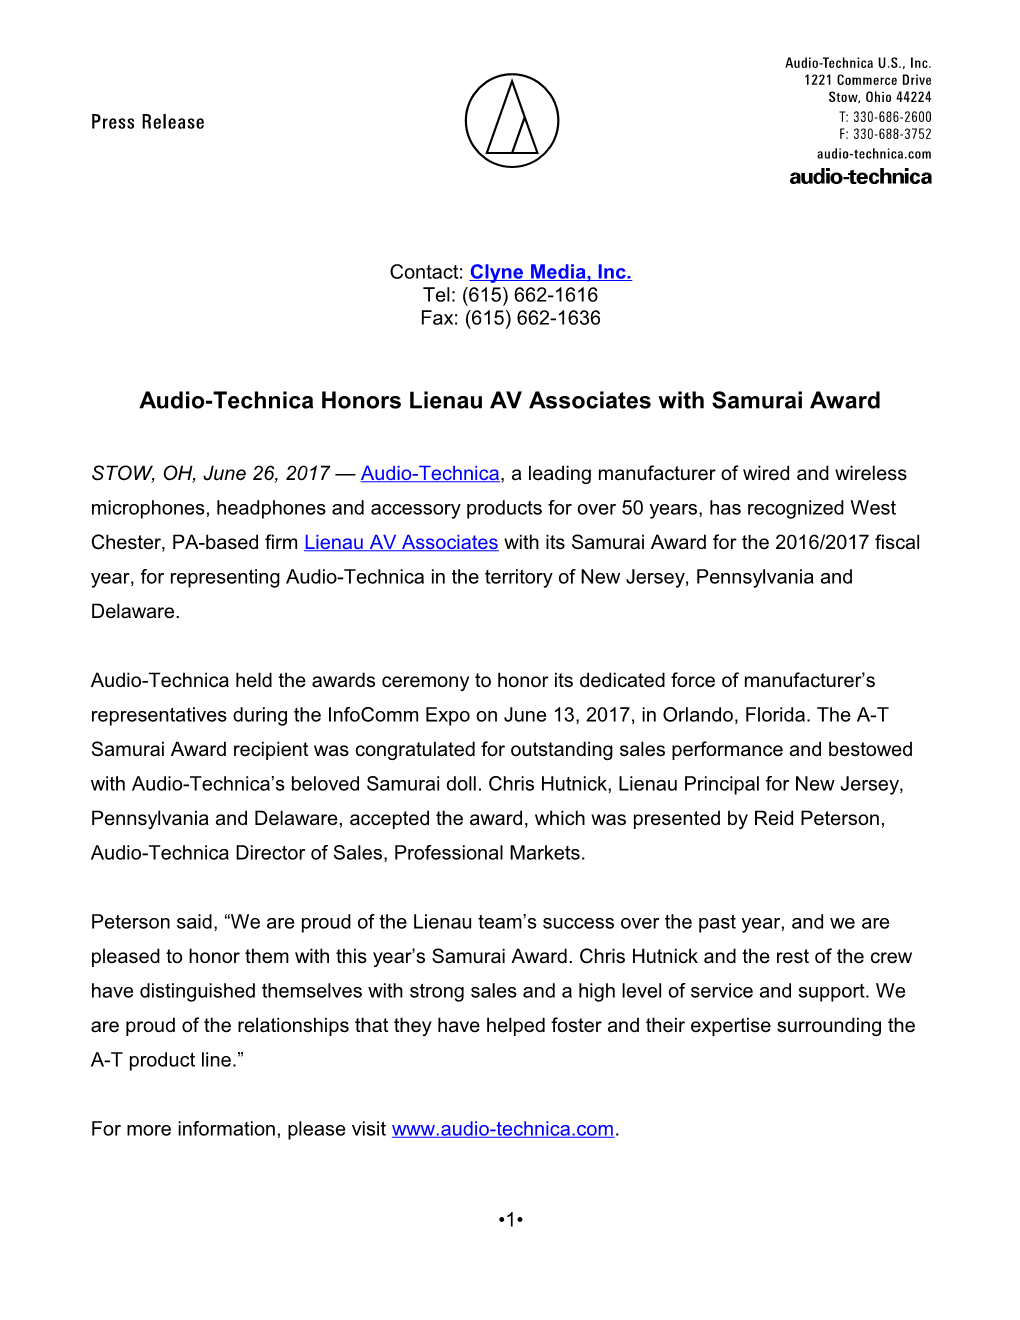 Audio-Technica Honors Lienau AV Associates with Samurai Award